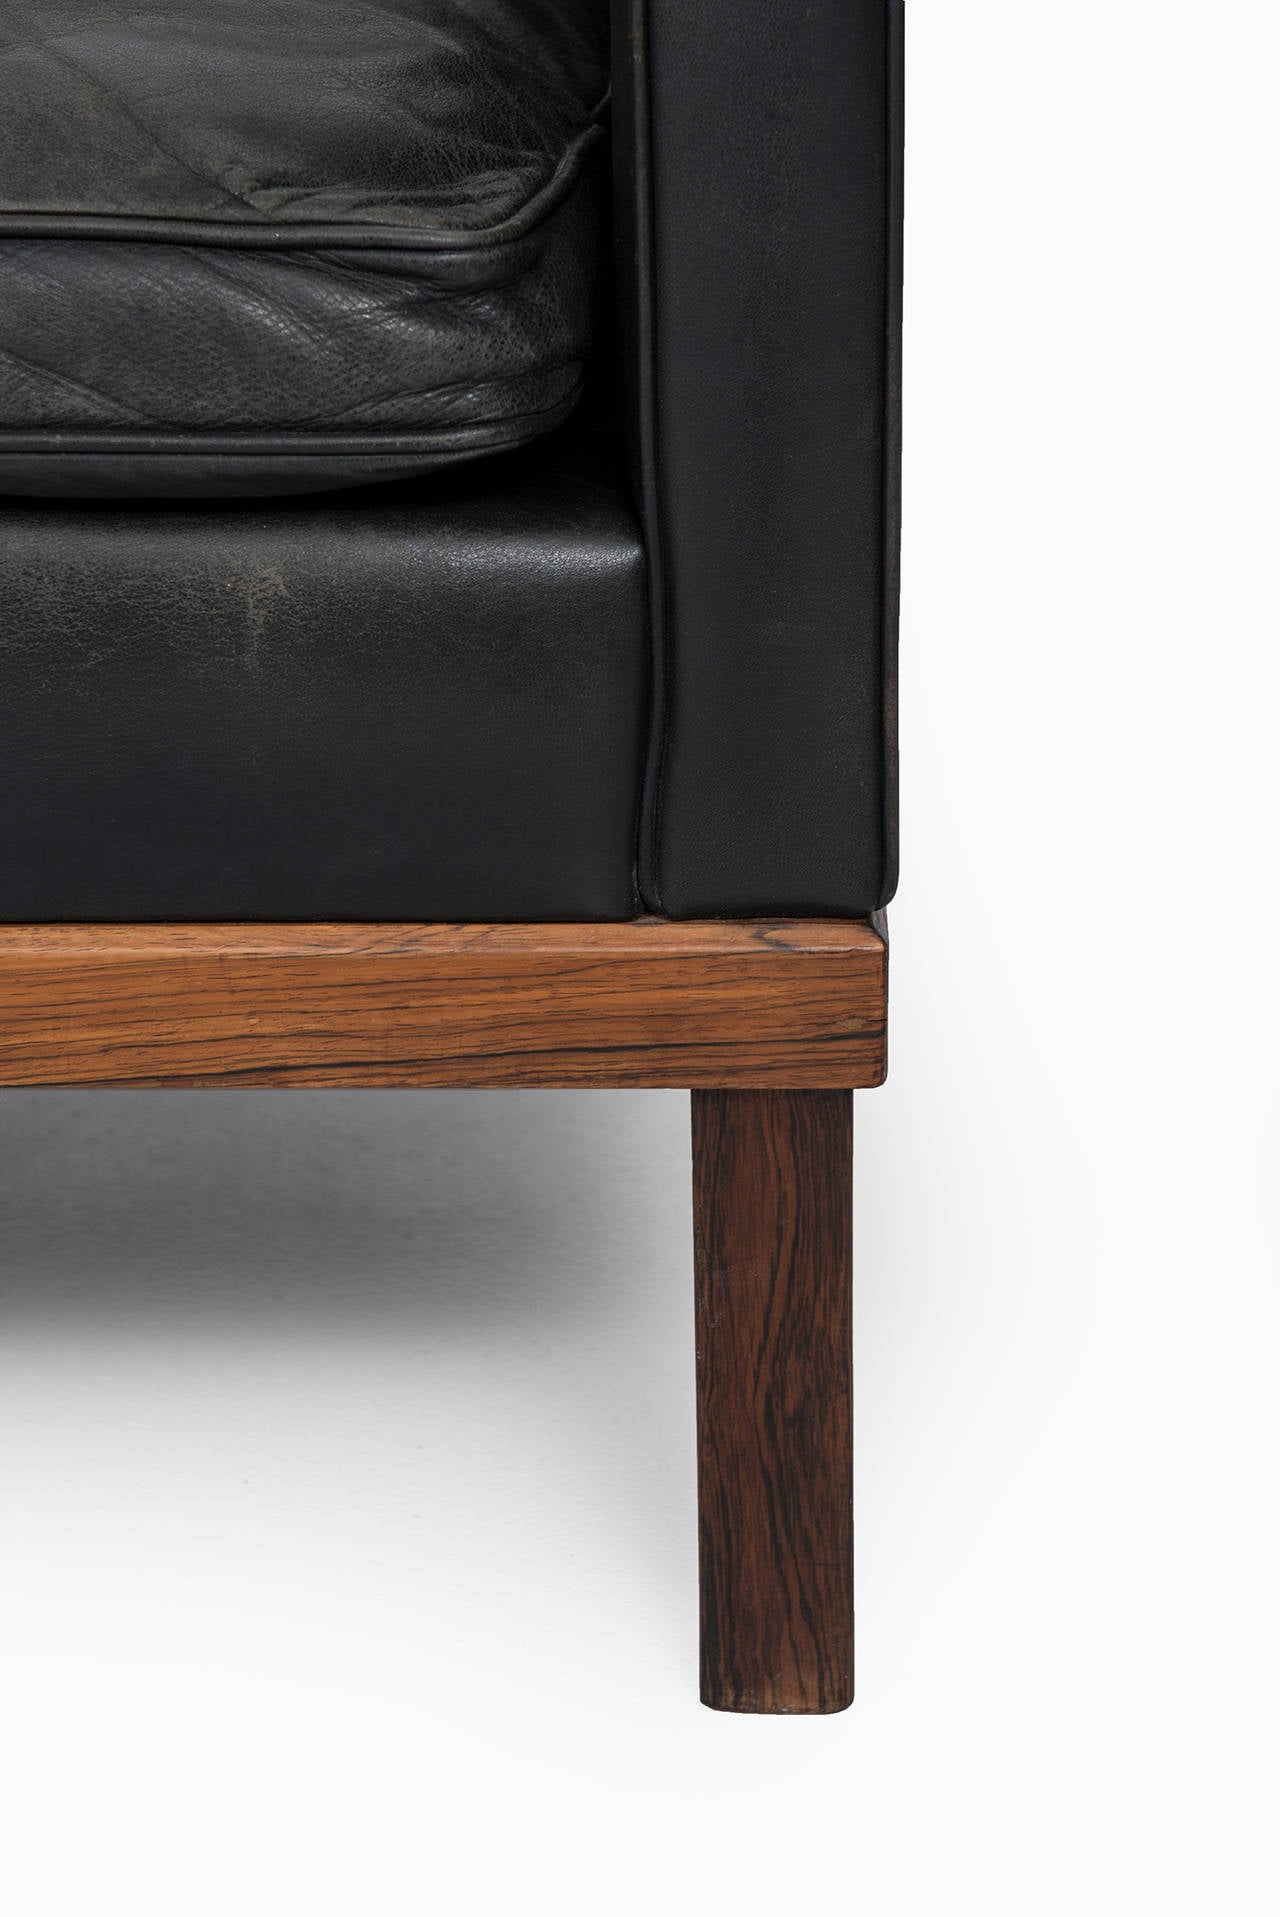 Mid-Century Modern Ib Kofod-Larsen leather sofa by OPE in Sweden